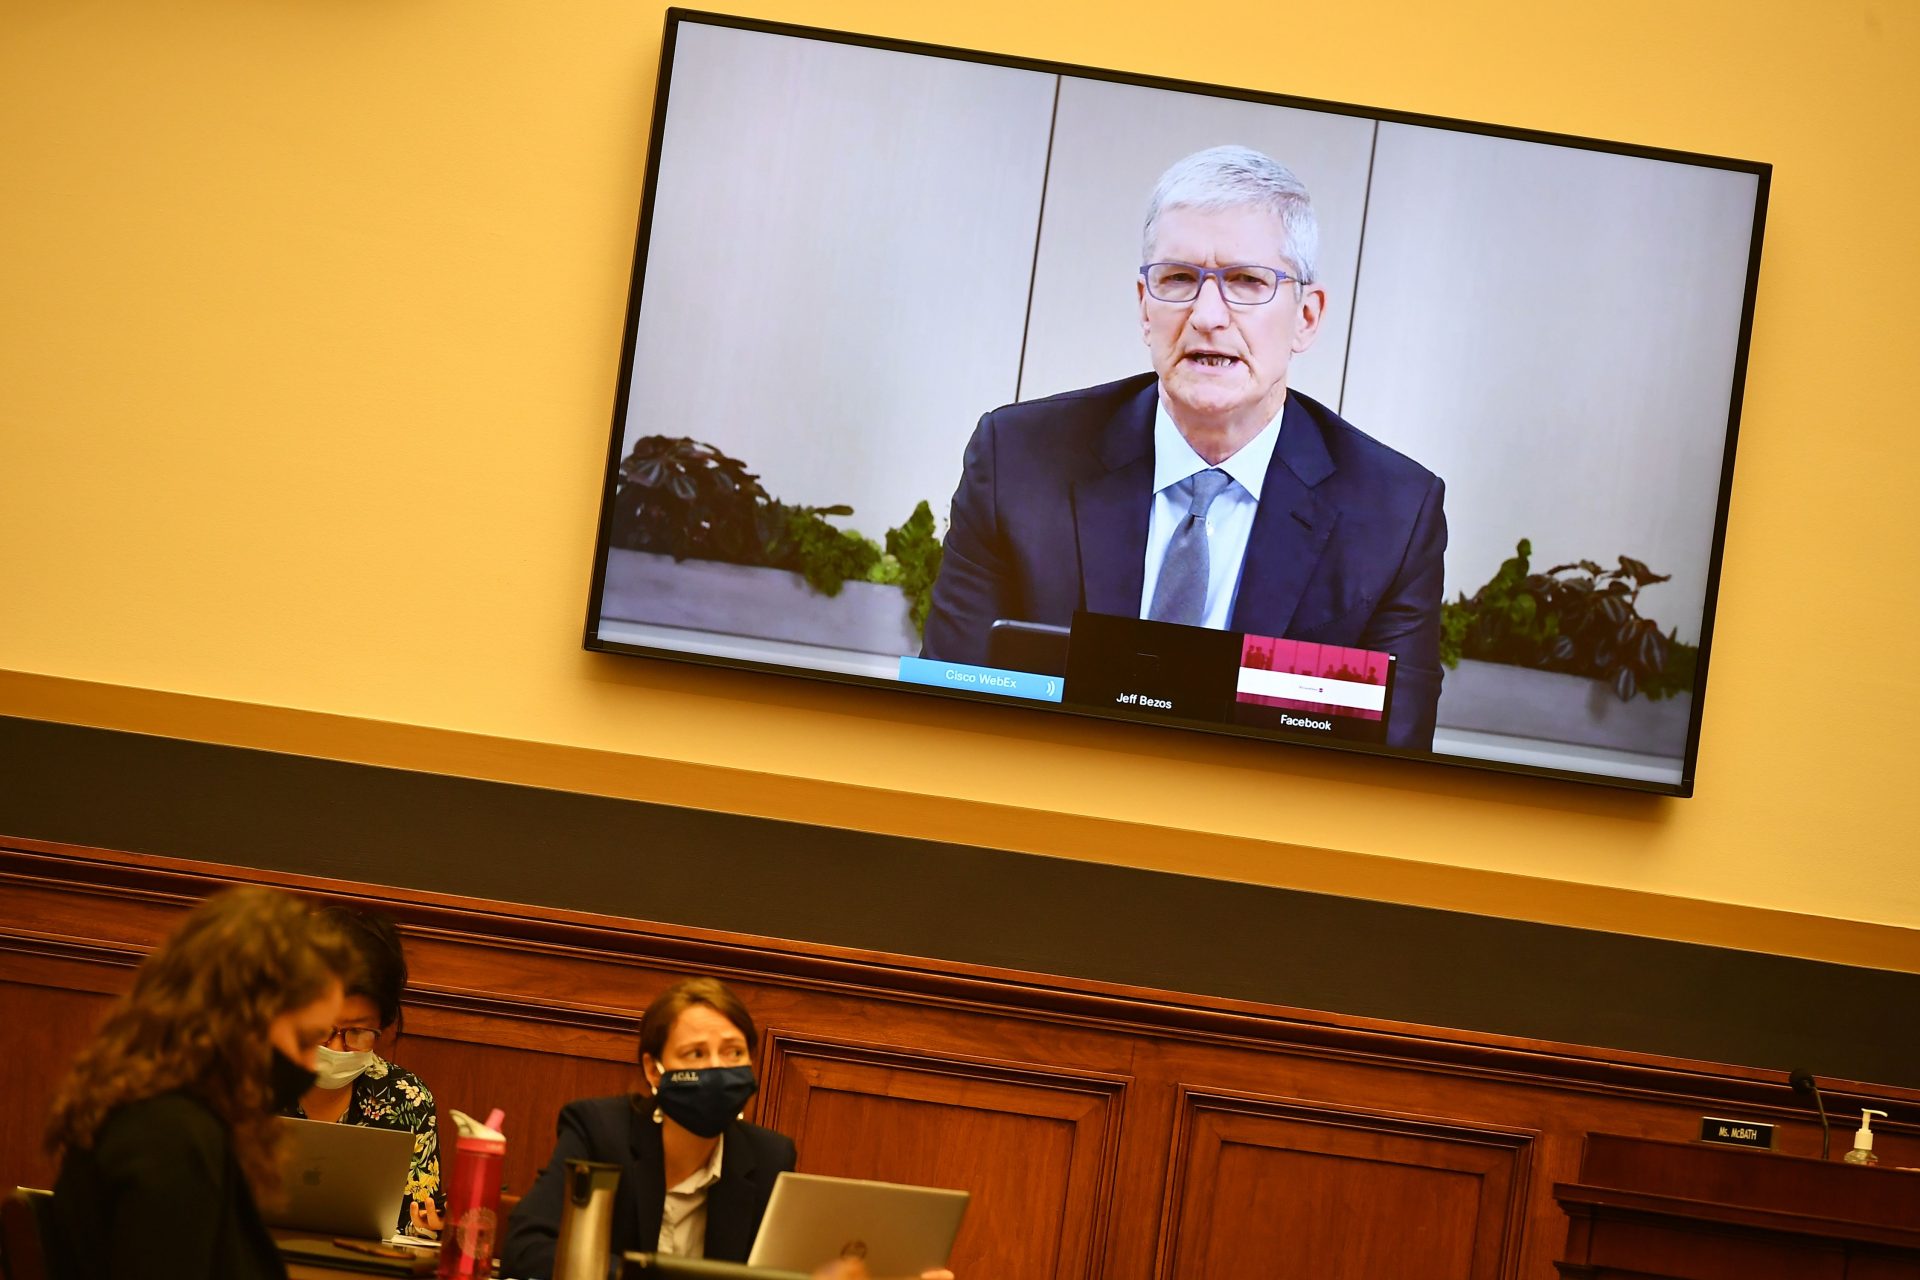 Apple needs Tim Cook, Tim Sweeney to testify in Yarn lawsuit